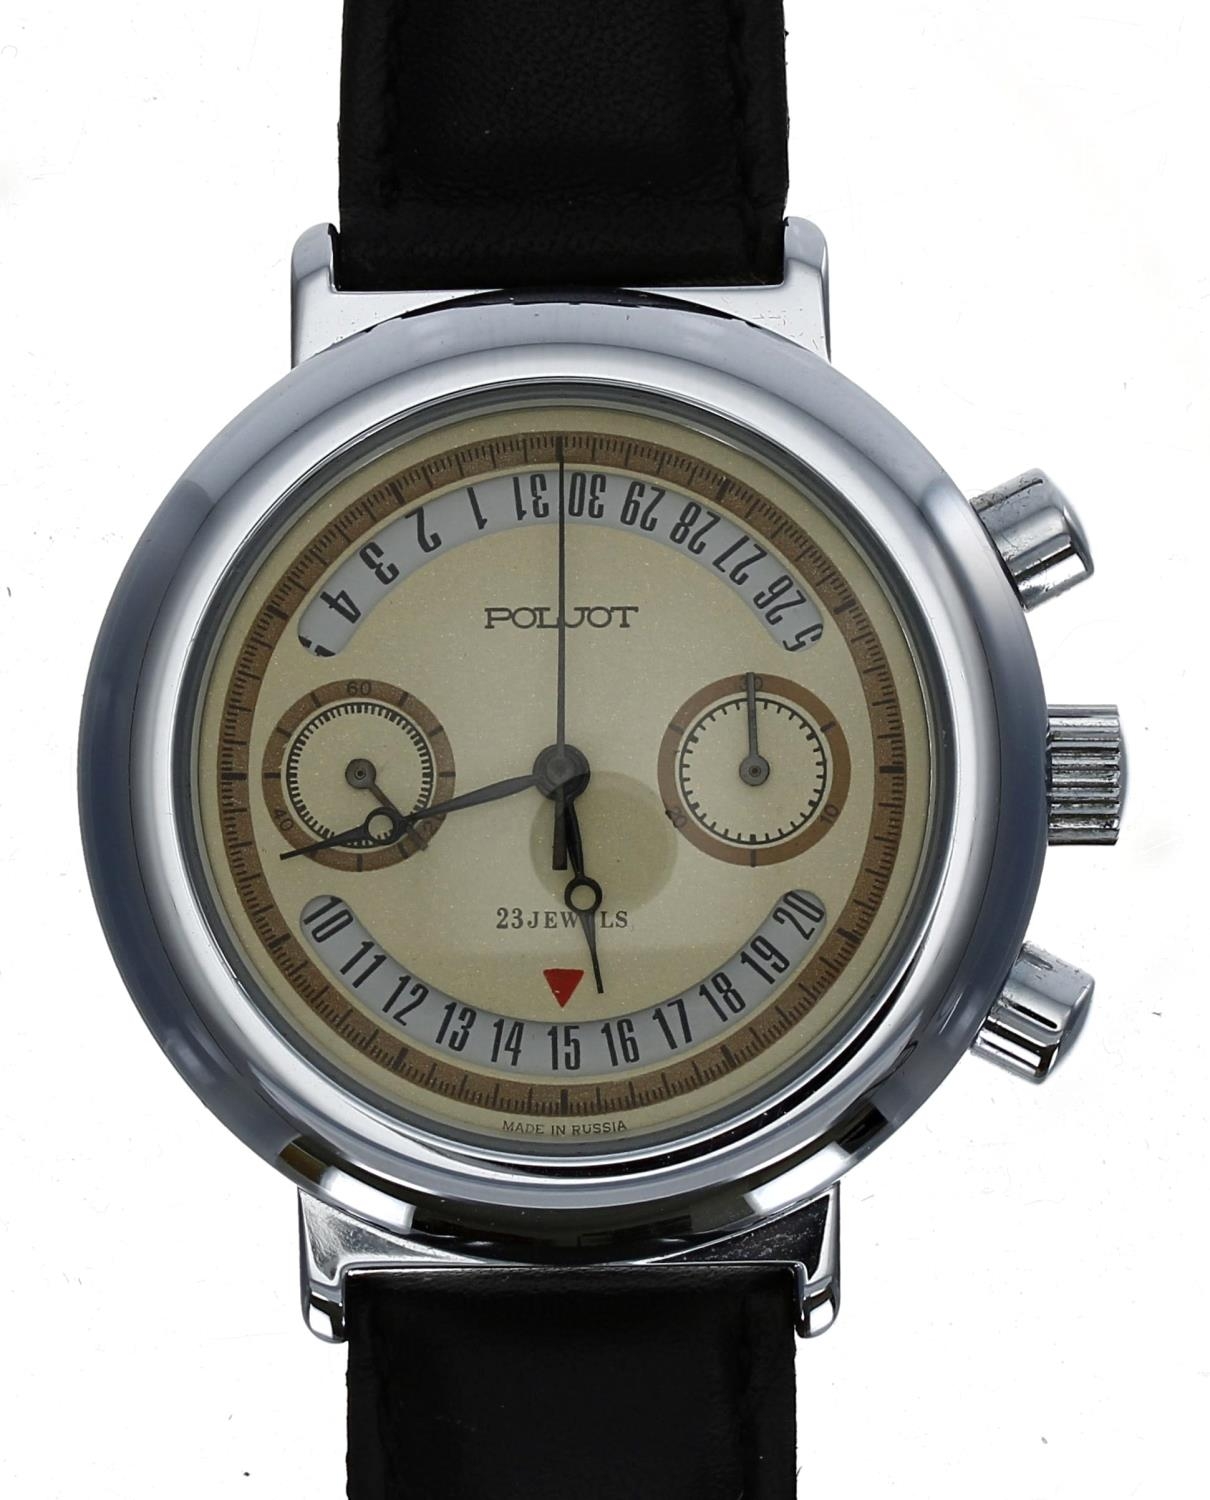 Poljot chronograph nickel/chrome and stainless steel gentleman's wristwatch, case no. 628xxx,